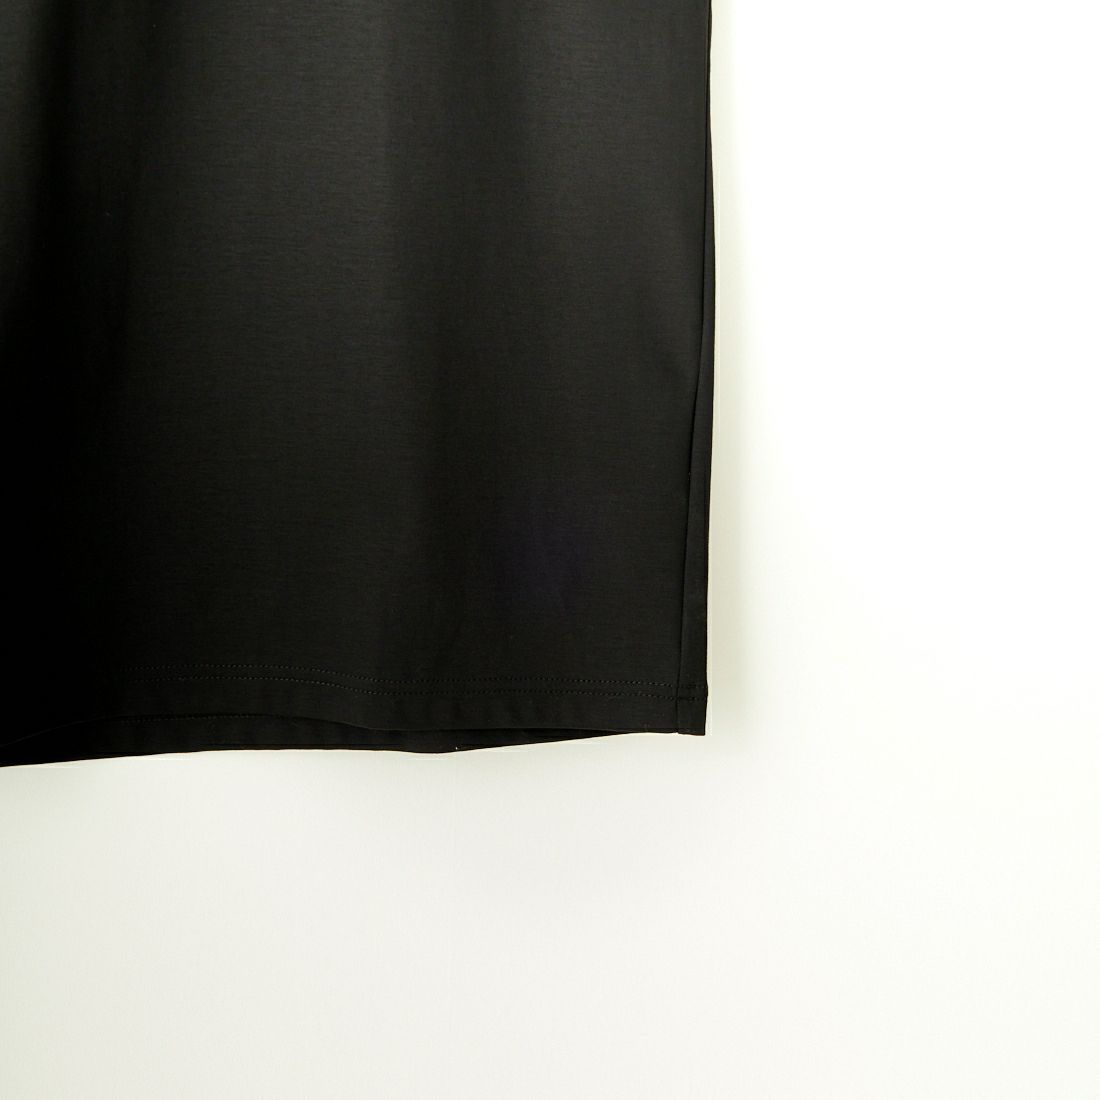 TATRAS [タトラス] 別注 GLUTO ショートスリーブTシャツ [MTIN24S8193-M-JF] BLACK